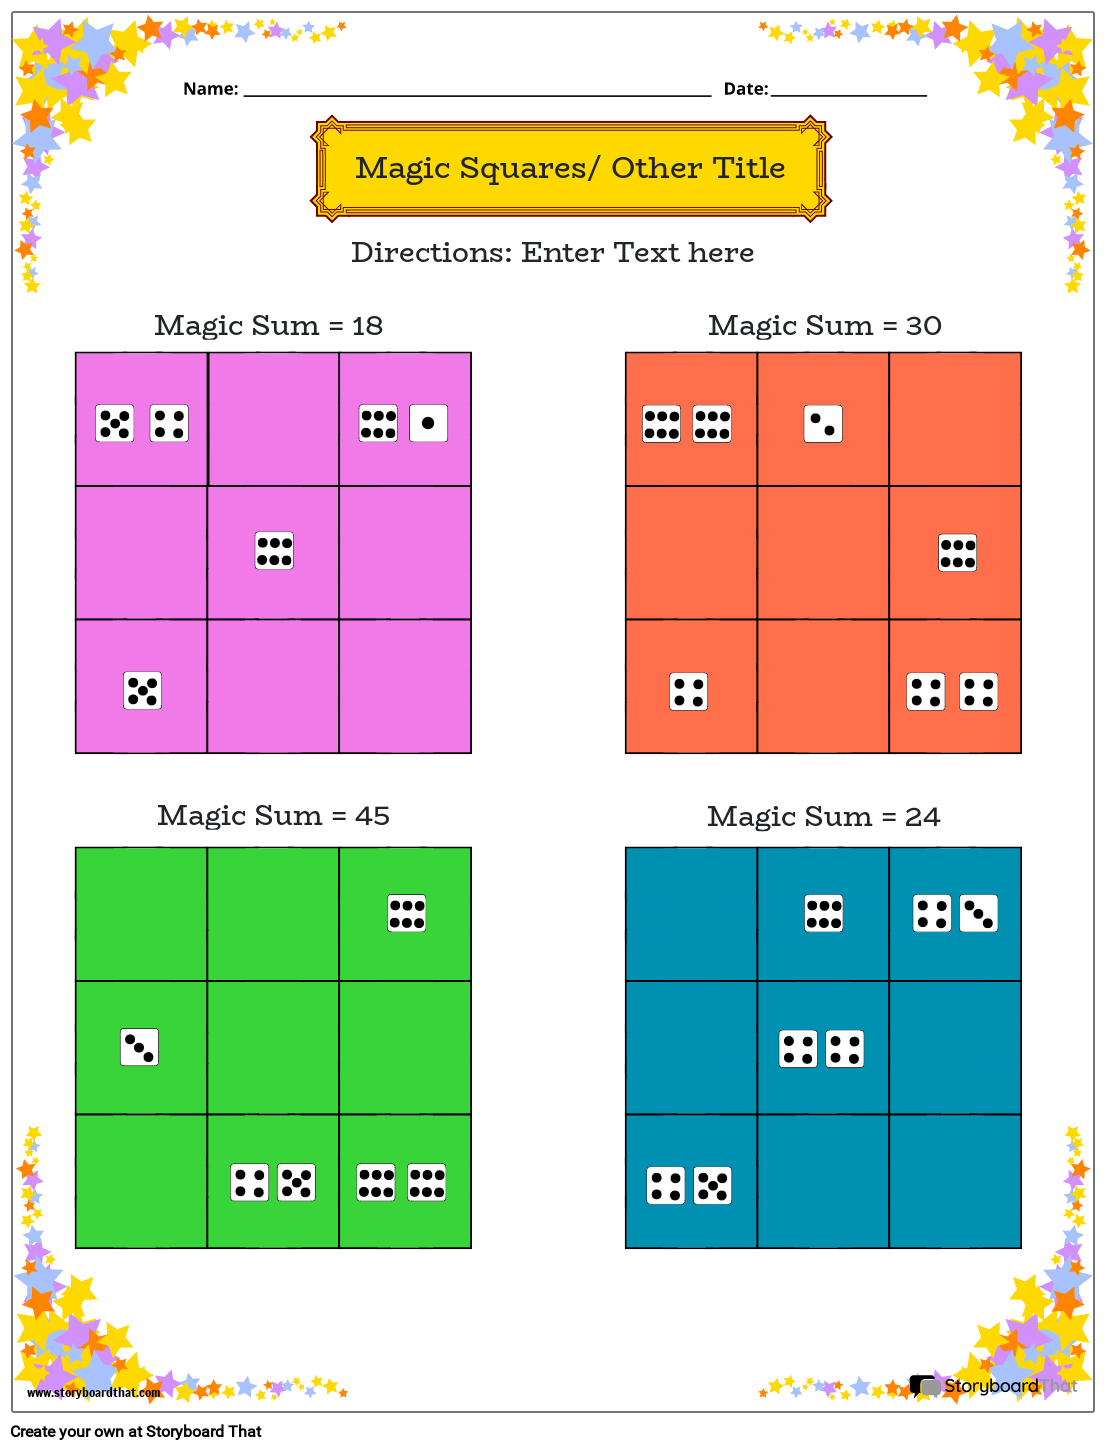 Magic Square - How to Solve Magic Squares in Maths